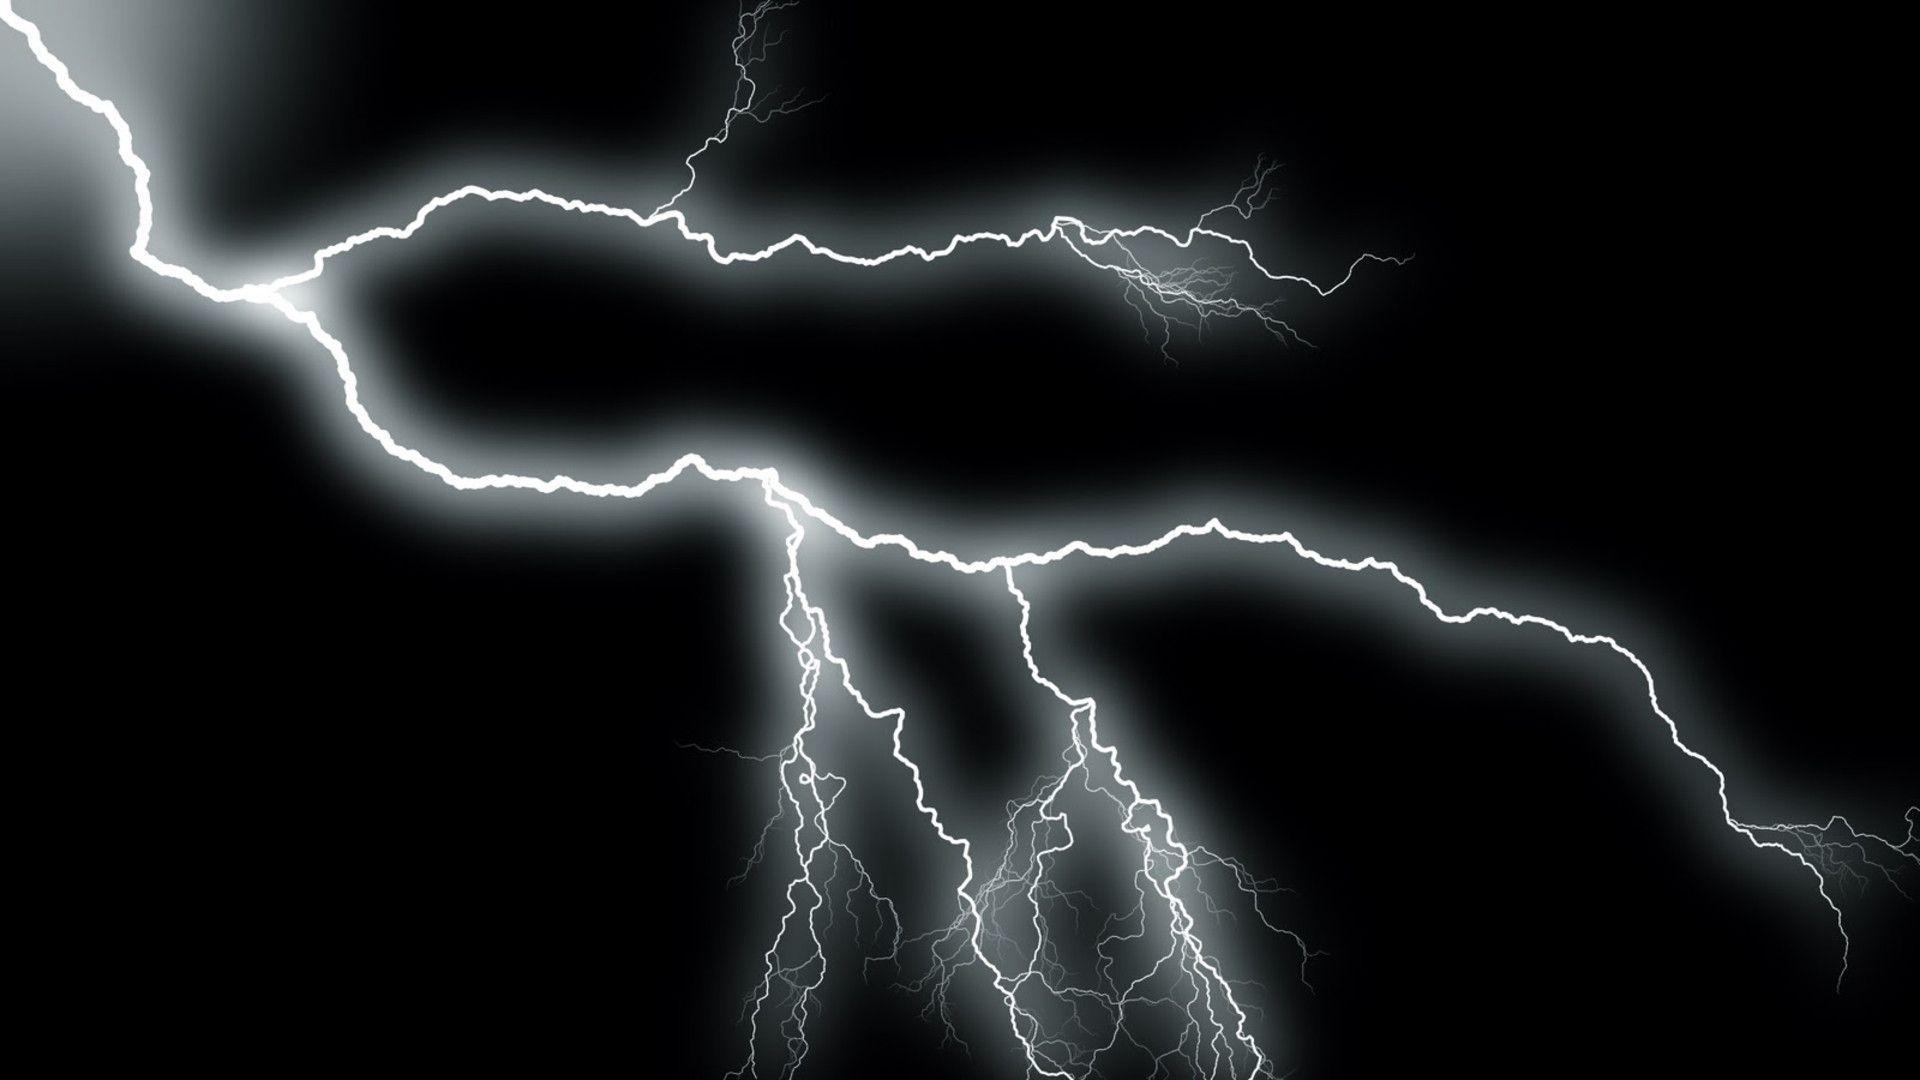 Wallpaper Darkness Web Player Thunder Lightning Atmosphere Background   Download Free Image